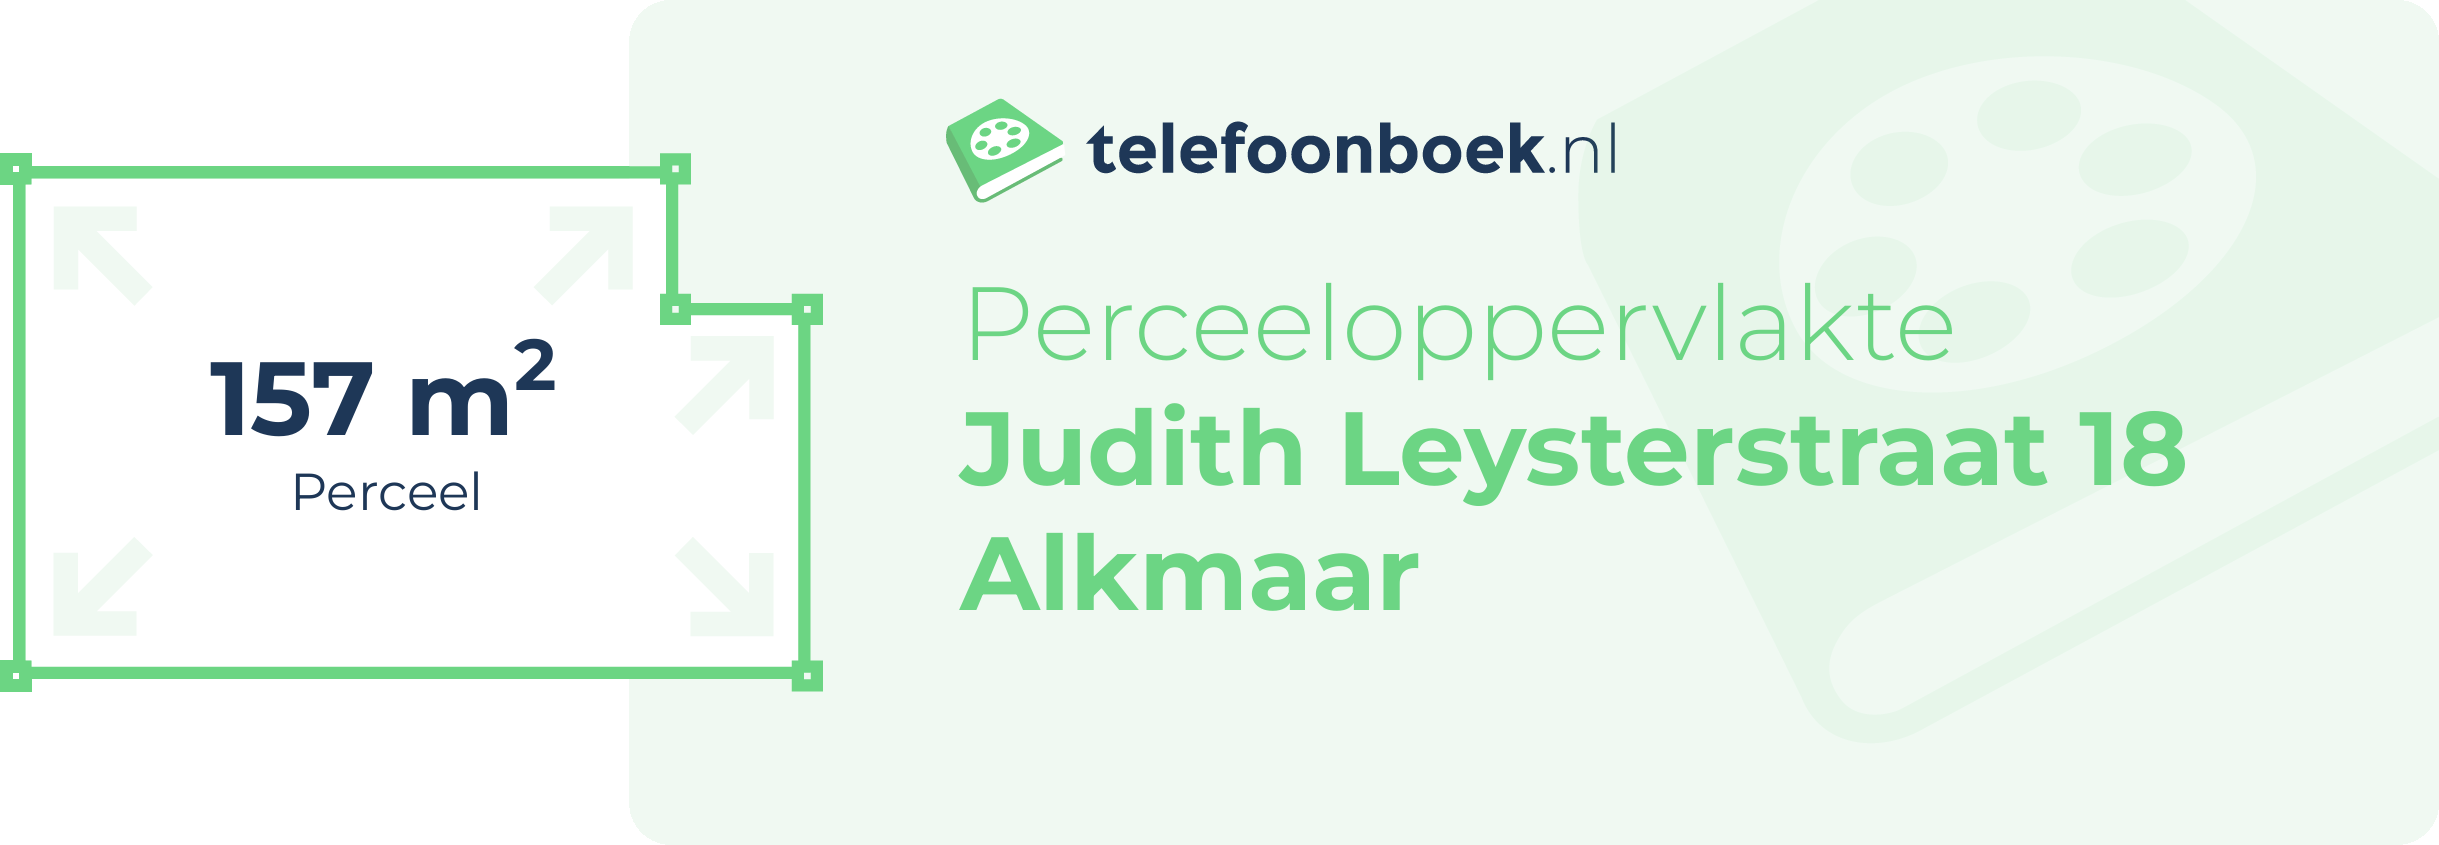 Perceeloppervlakte Judith Leysterstraat 18 Alkmaar